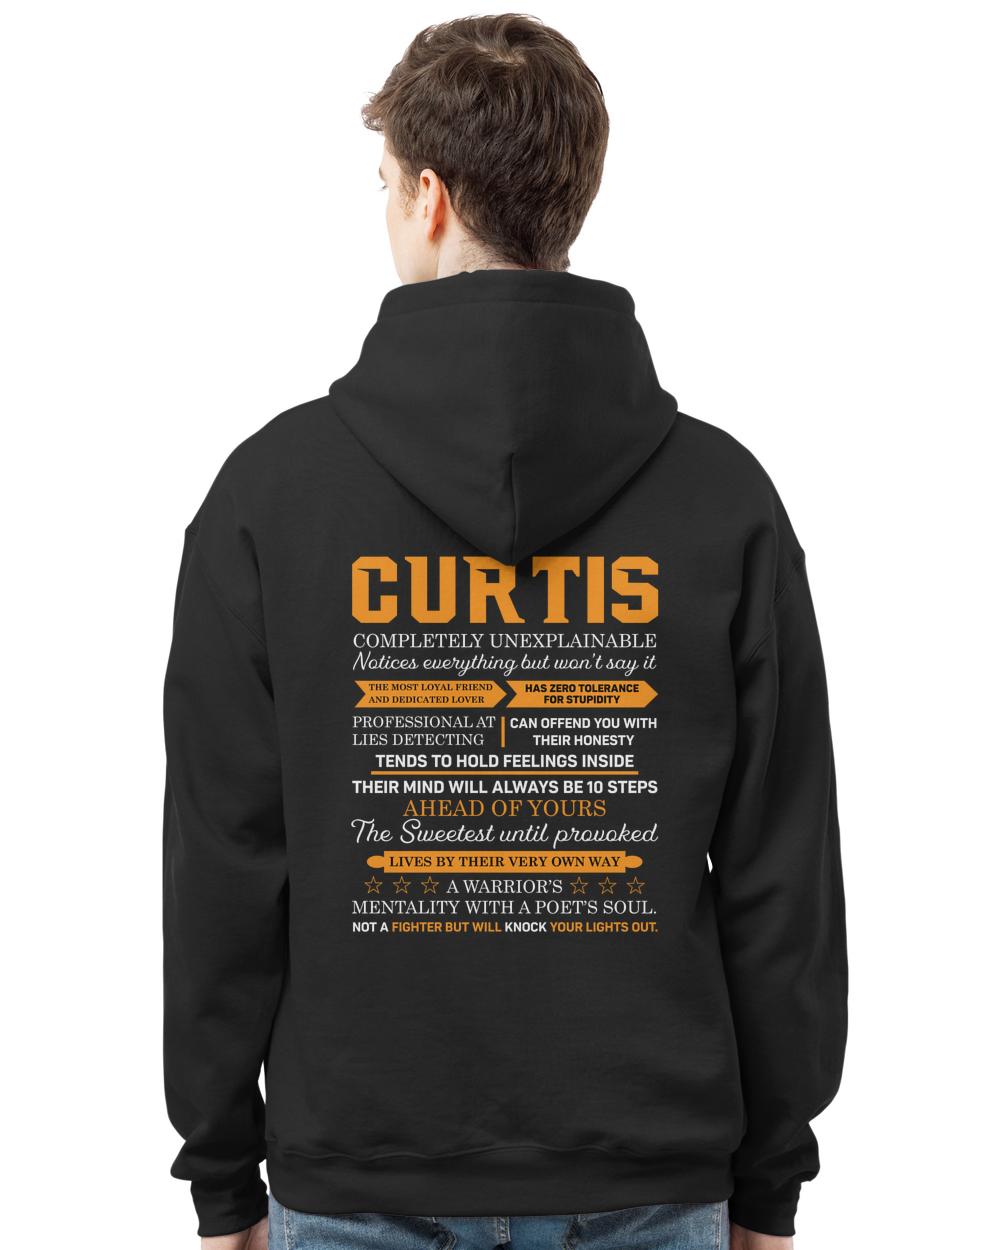 CURTIS-13K-N1-01